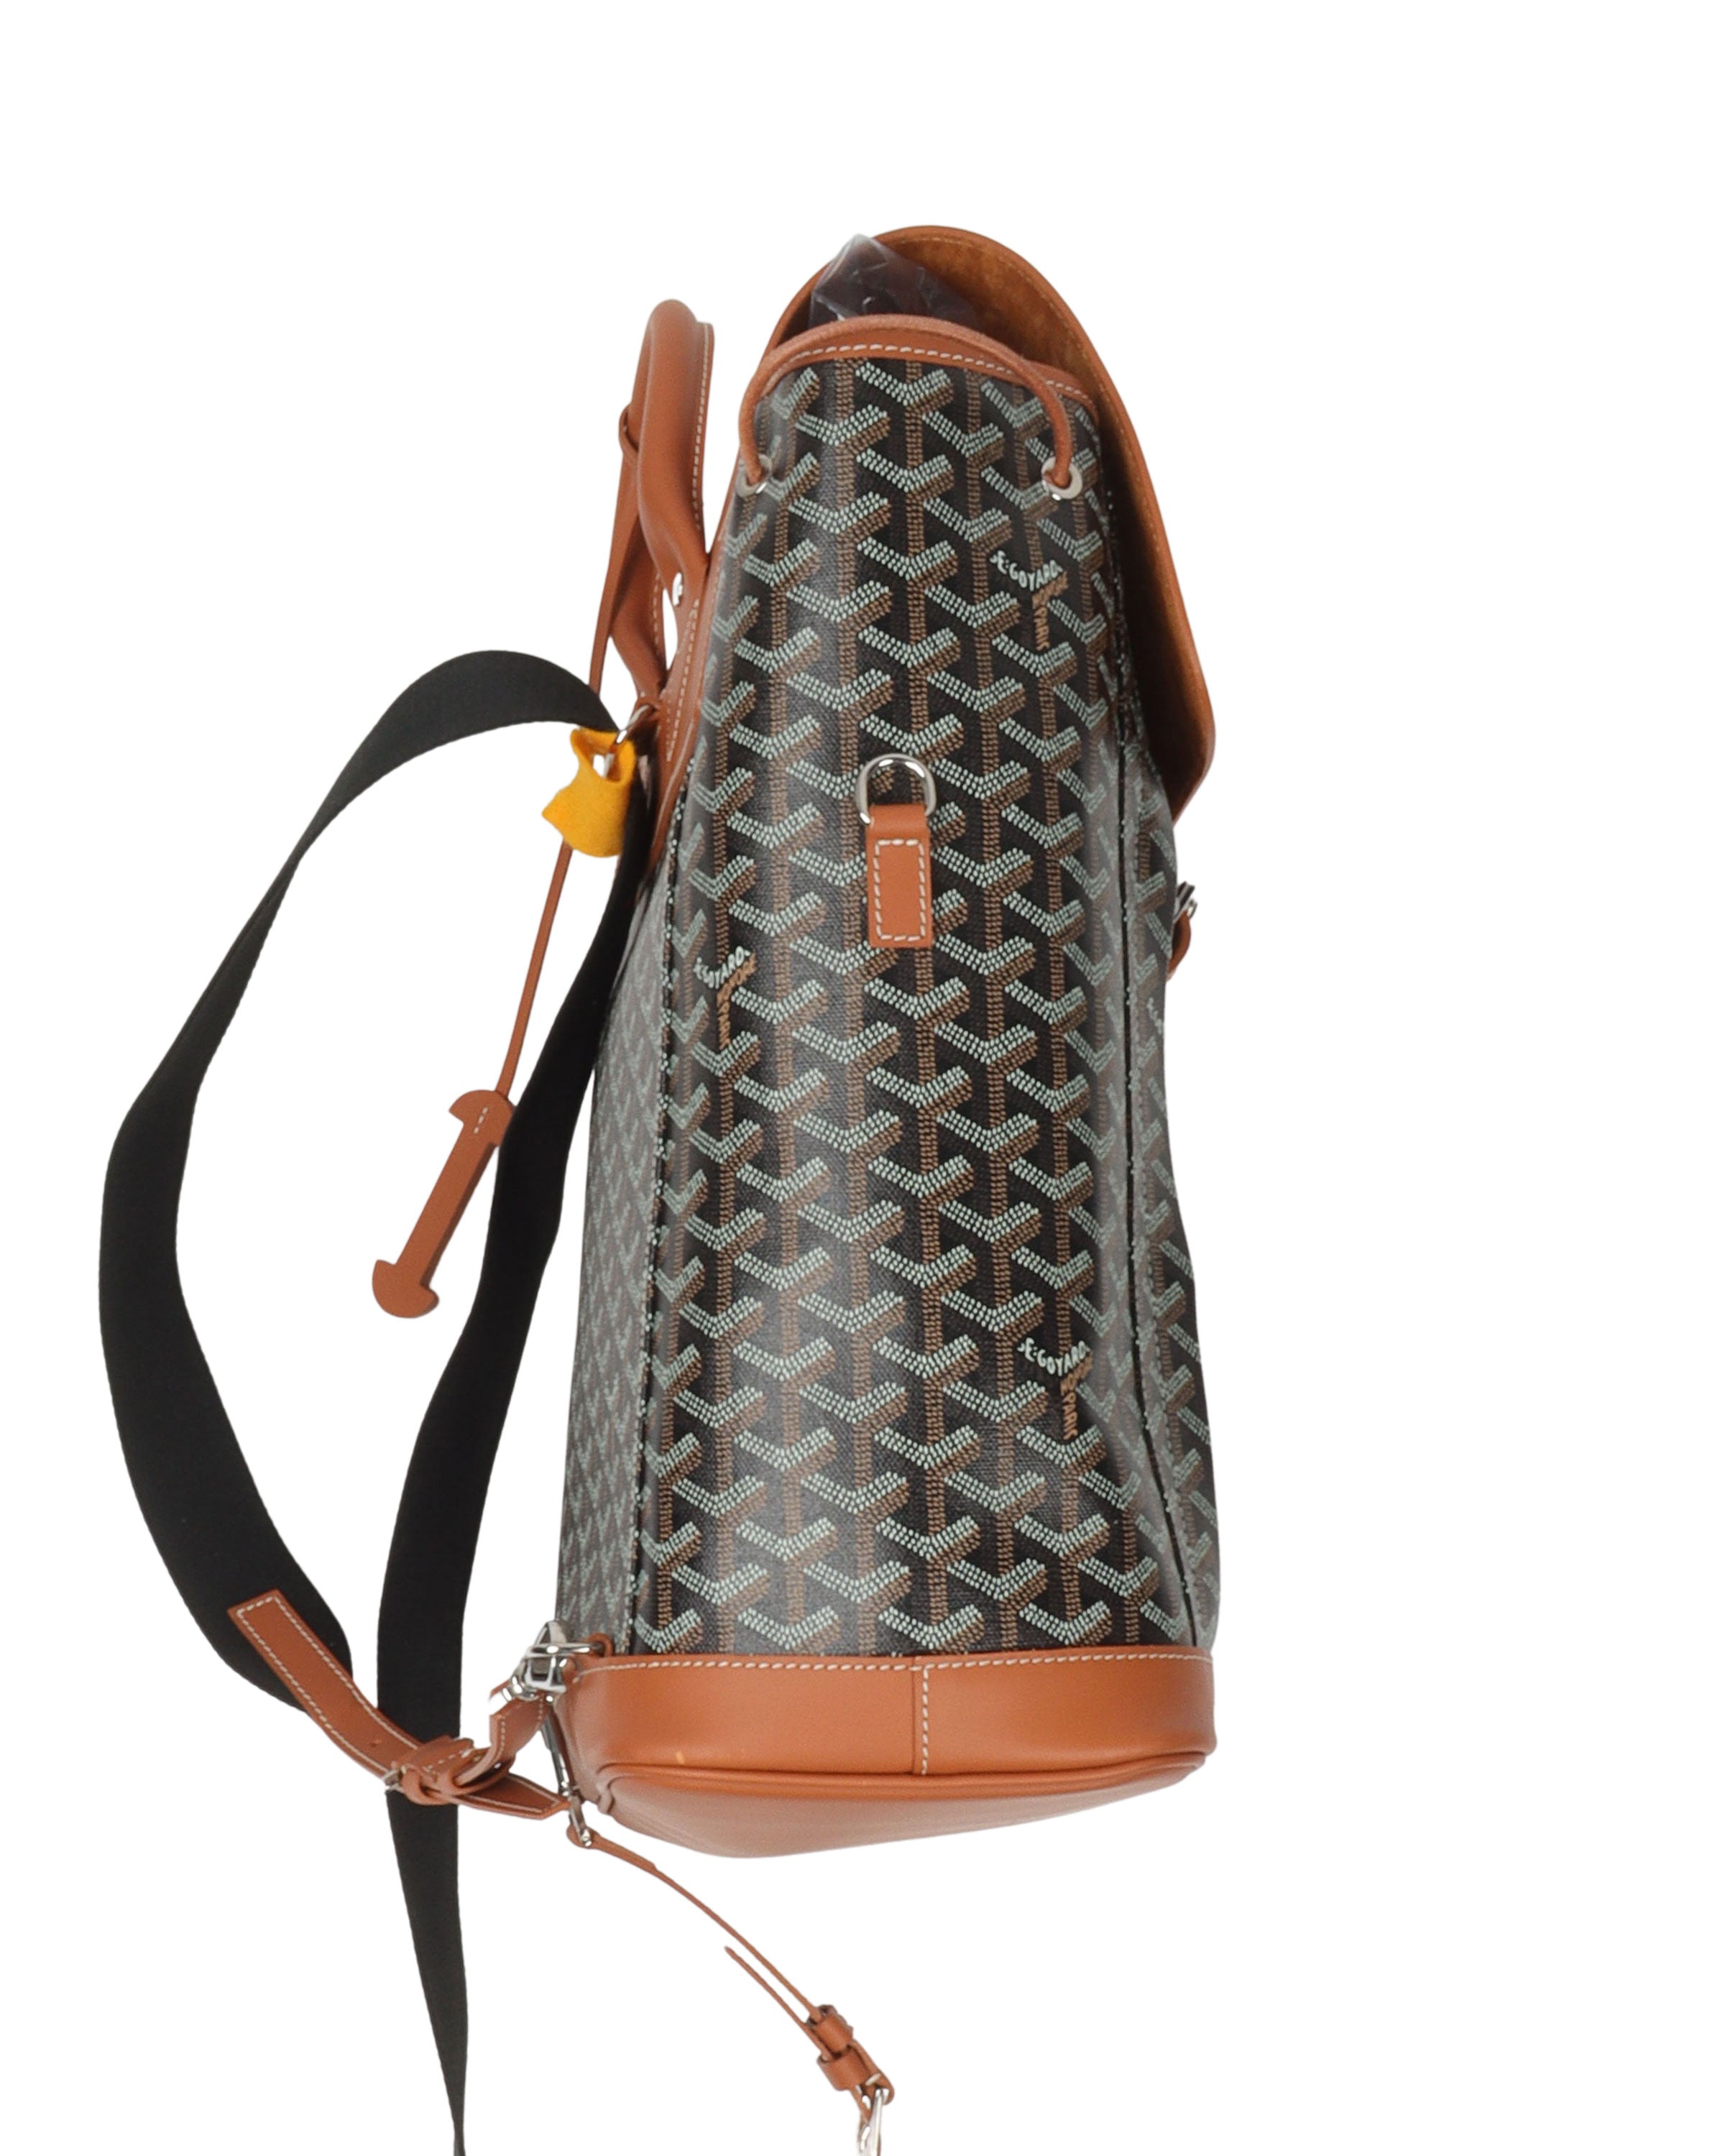 Goyard Alpin - For Sale on 1stDibs  goyard alpin backpack price, goyard  backpack, goyard alpin price